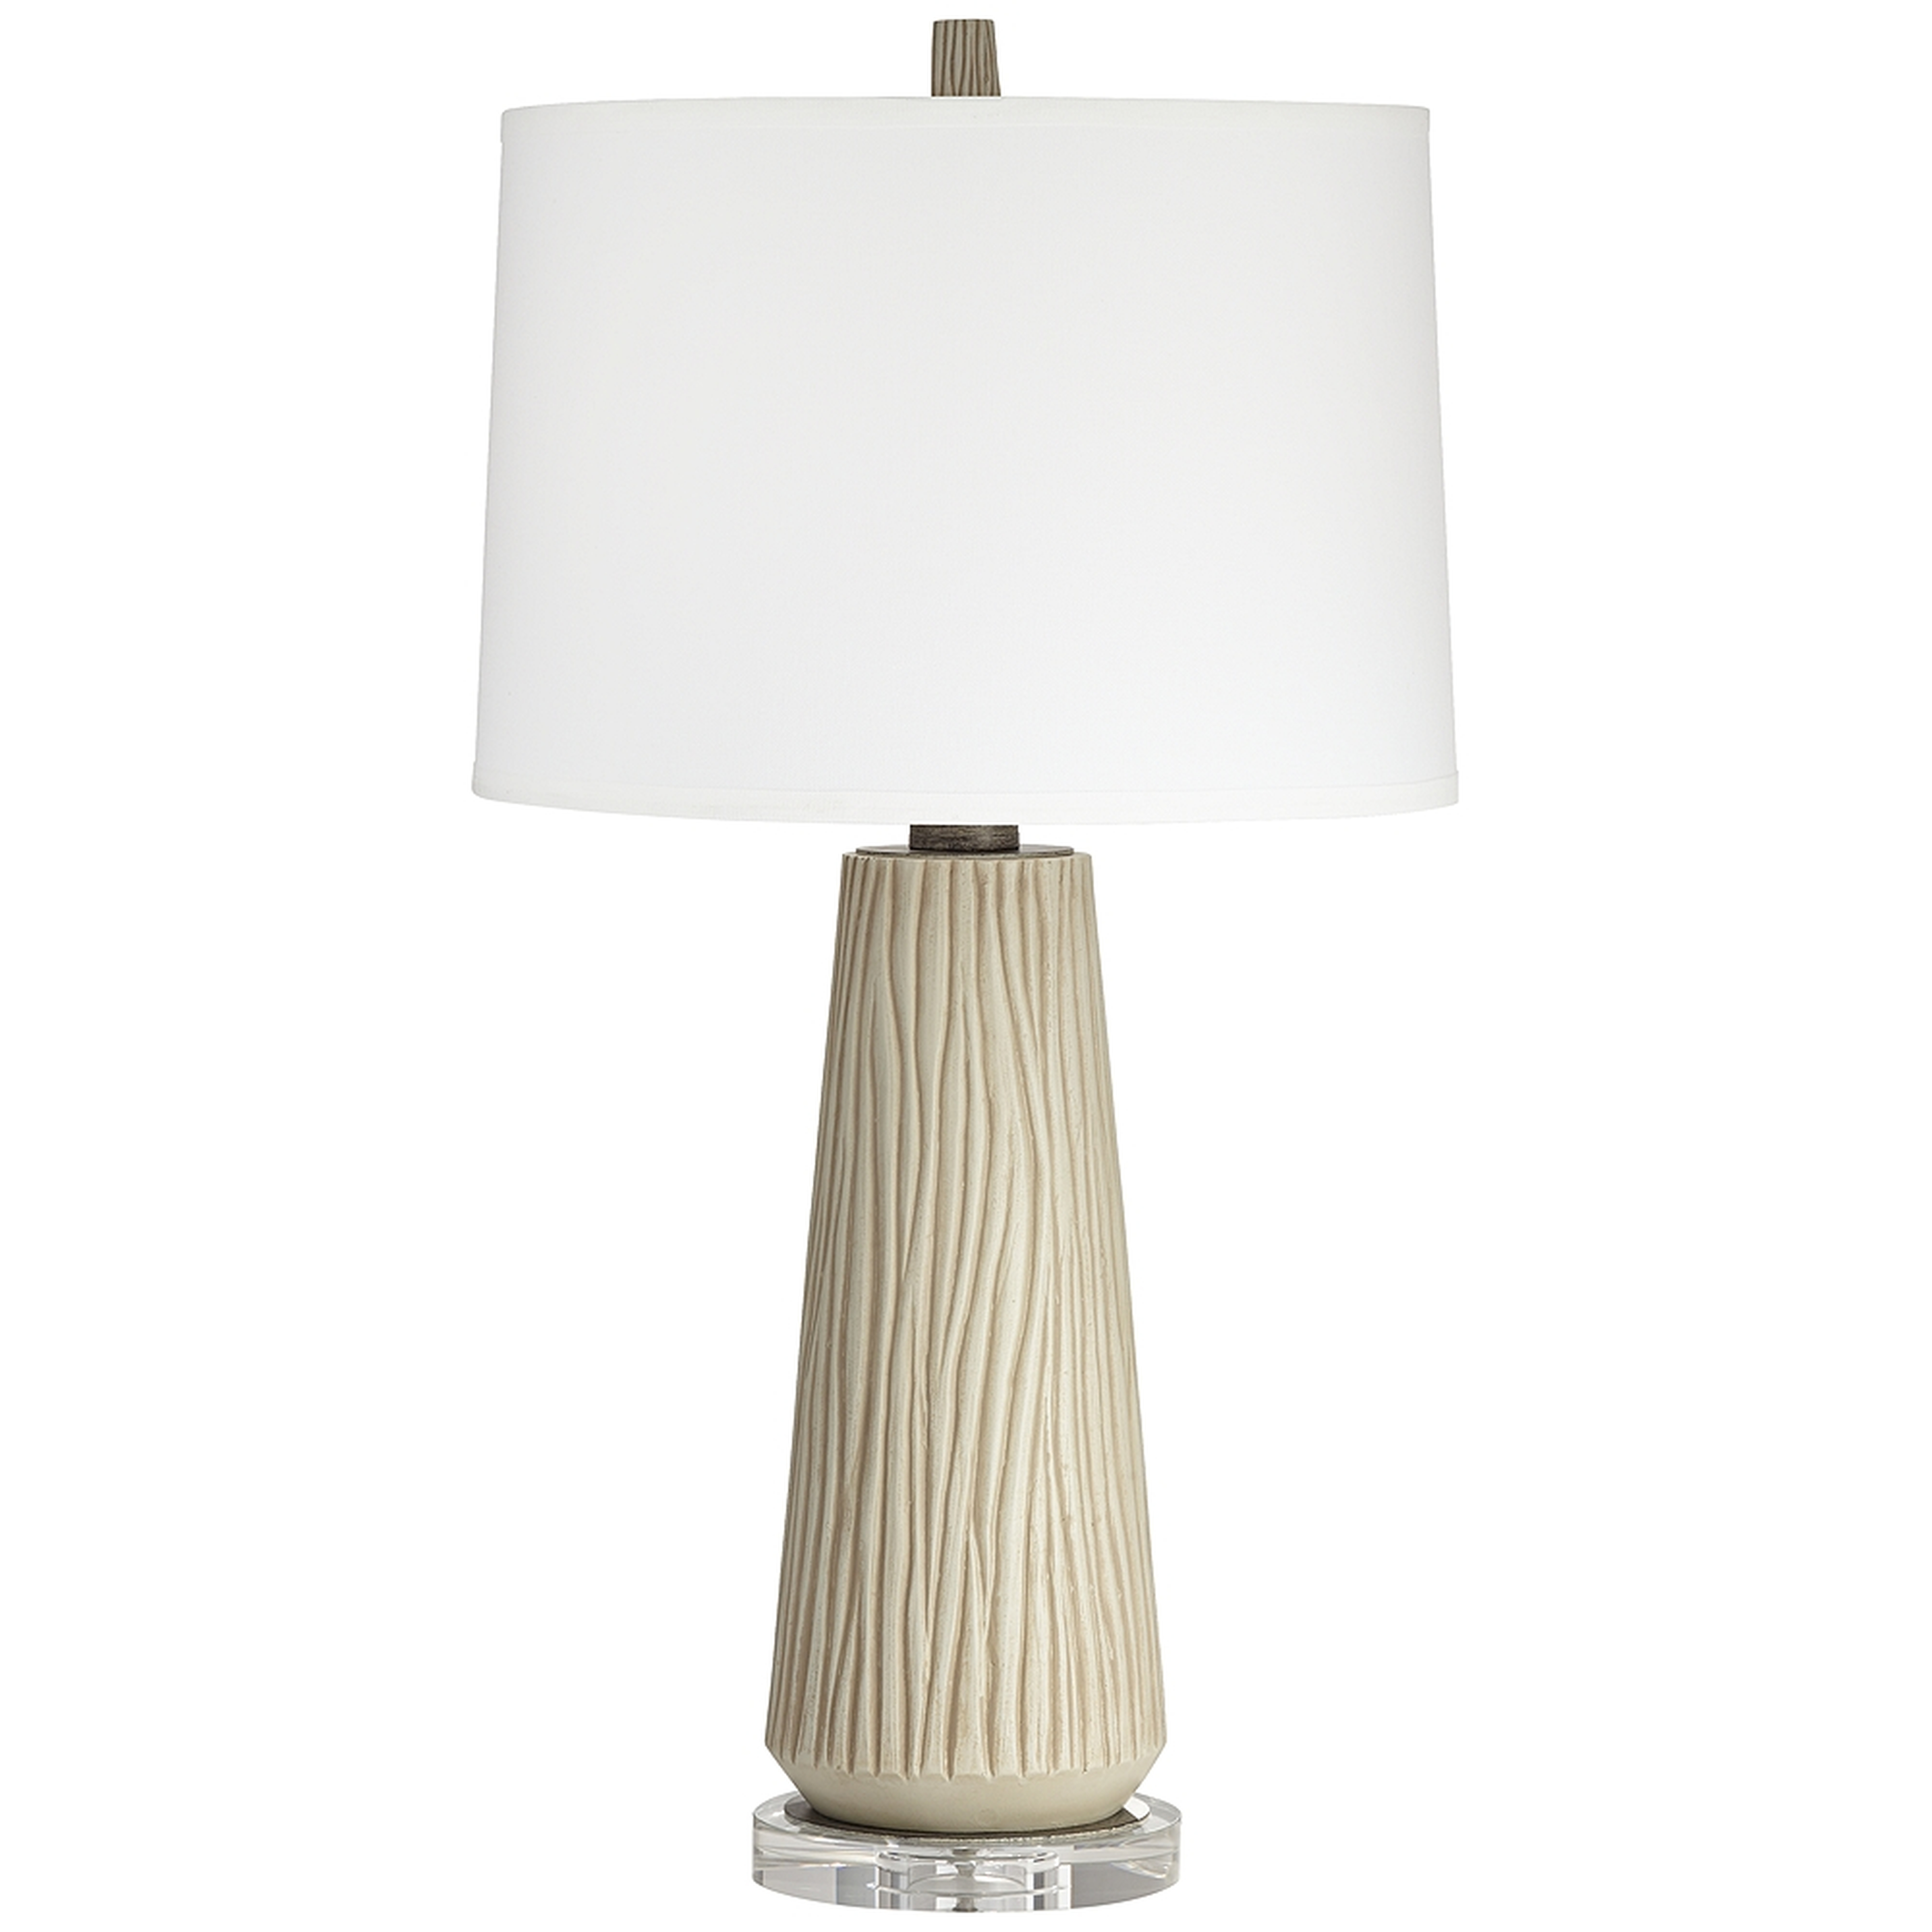 West Oak Rustic Modern Table Lamp - Style # 91V04 - Lamps Plus